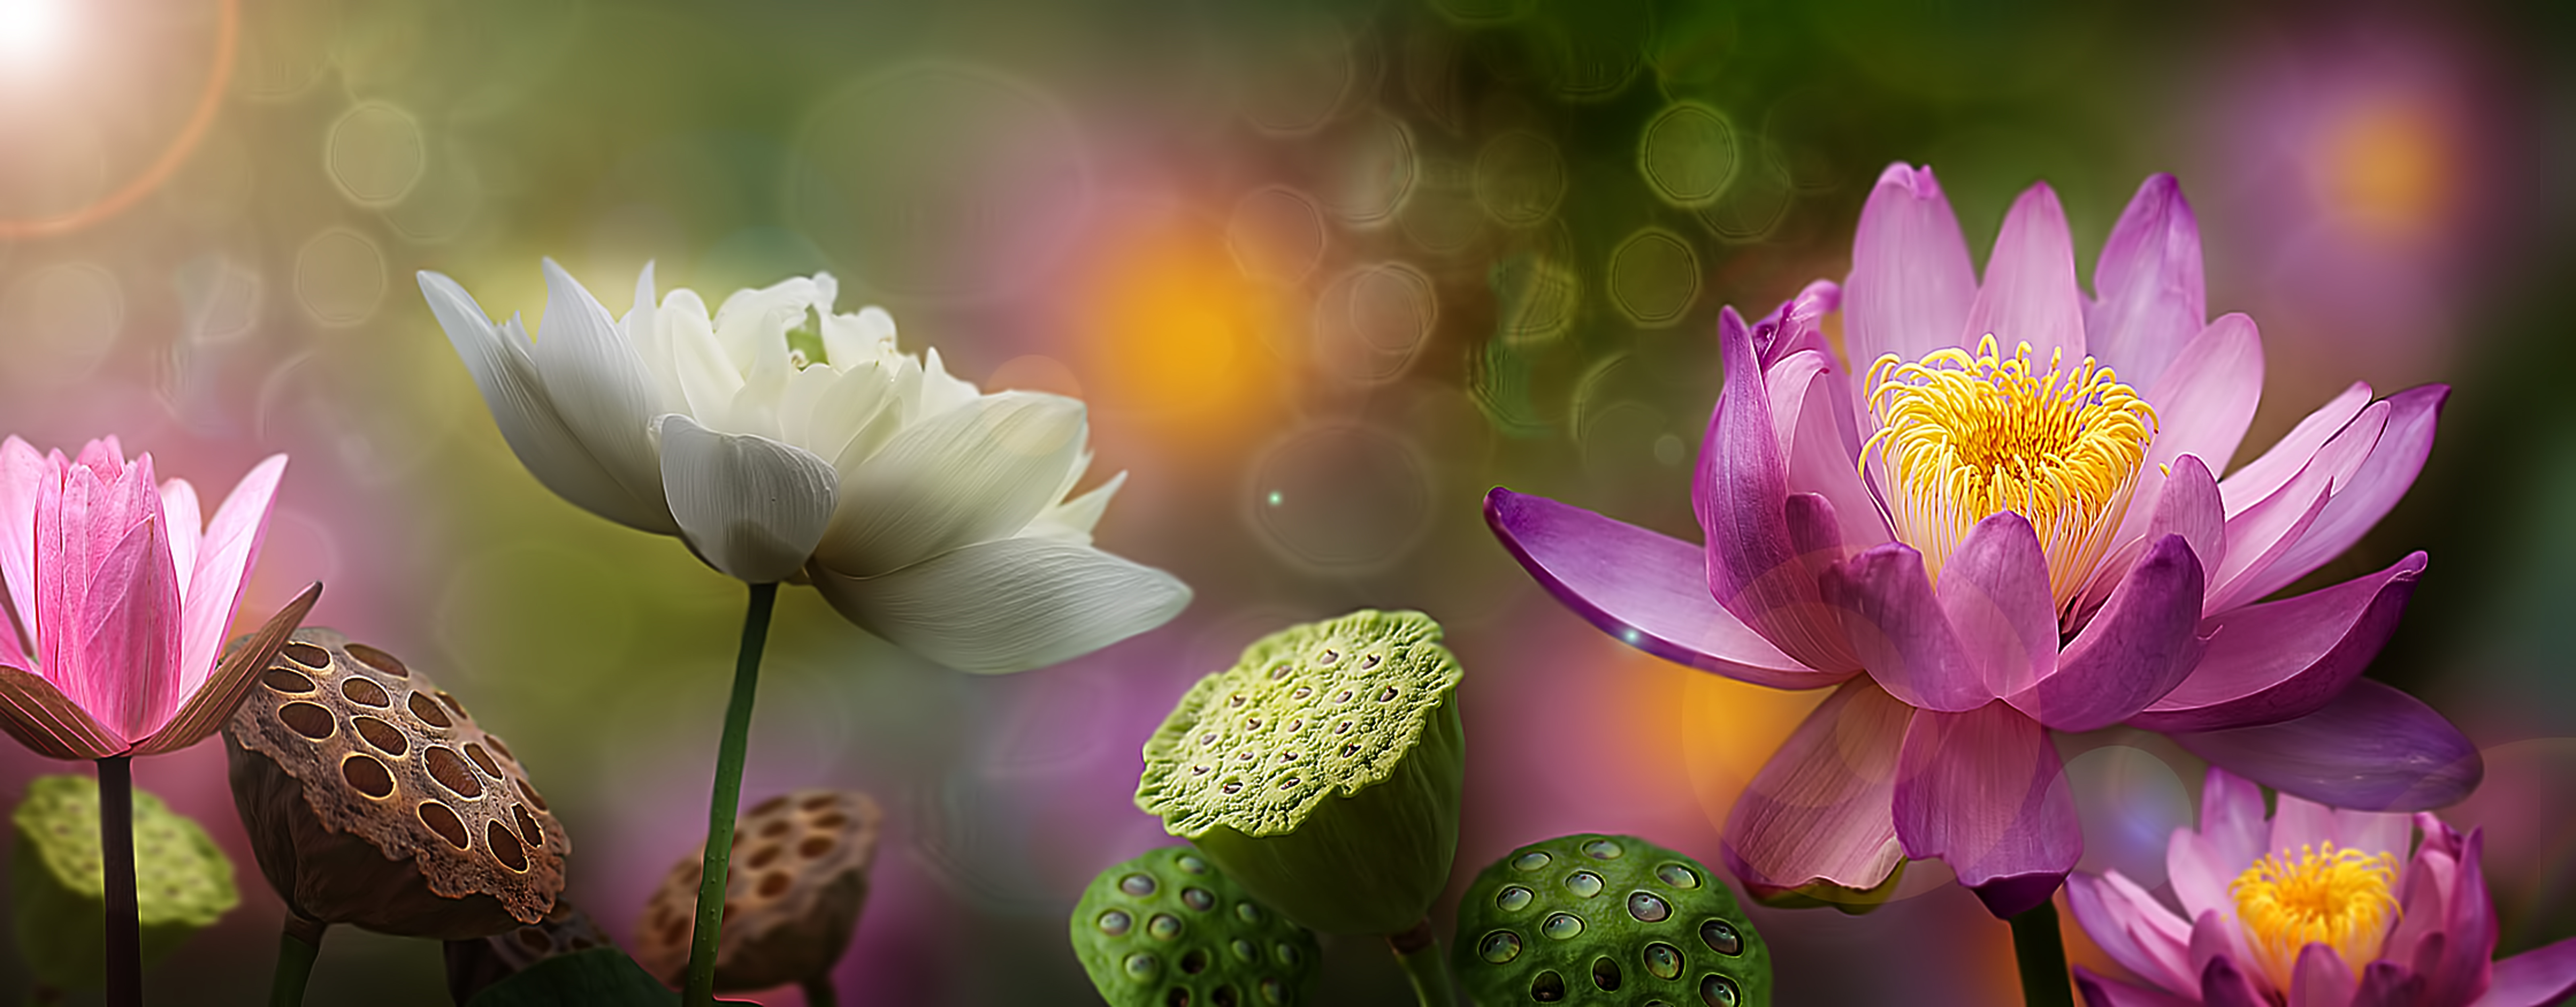 Wallpapers view lotus flower arrangement panorama on the desktop